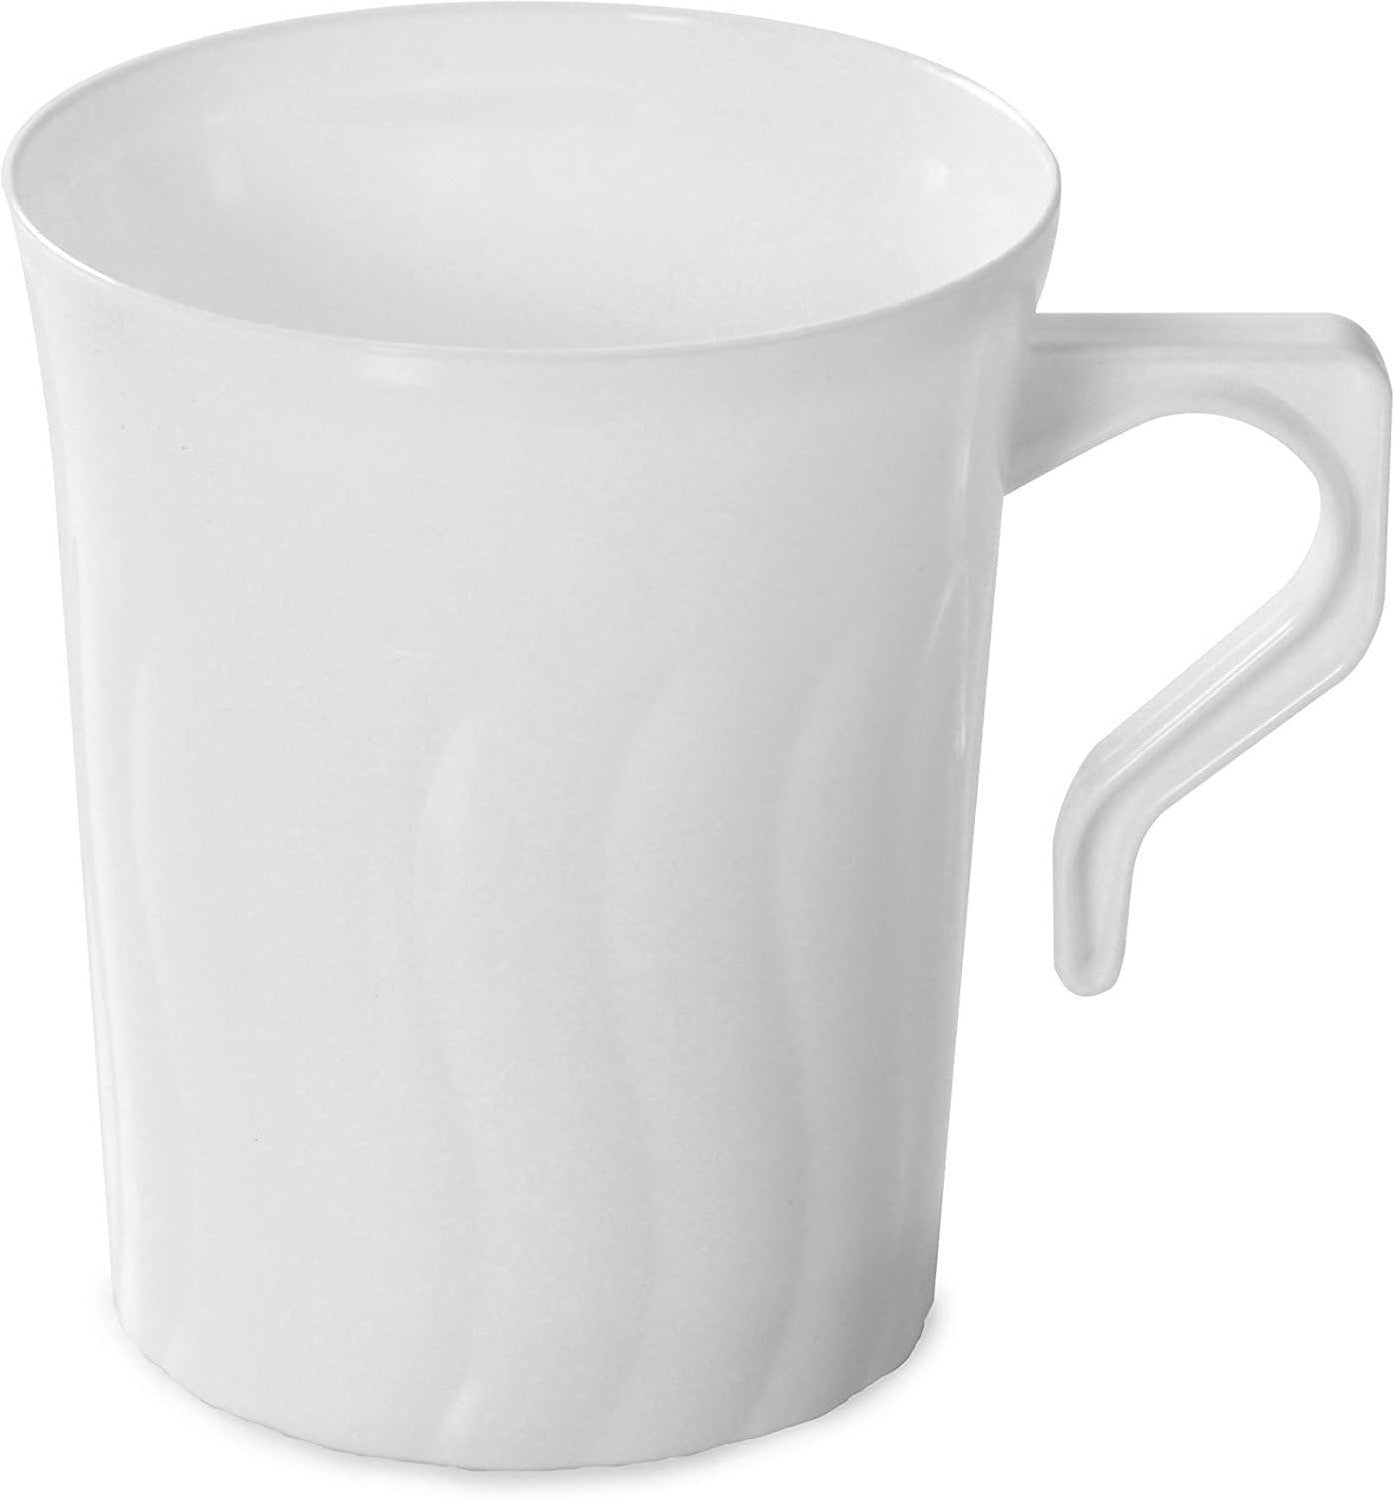 Fineline Settings - 8 Oz White Plastic Coffee Mug, 288/cs - 208-WH